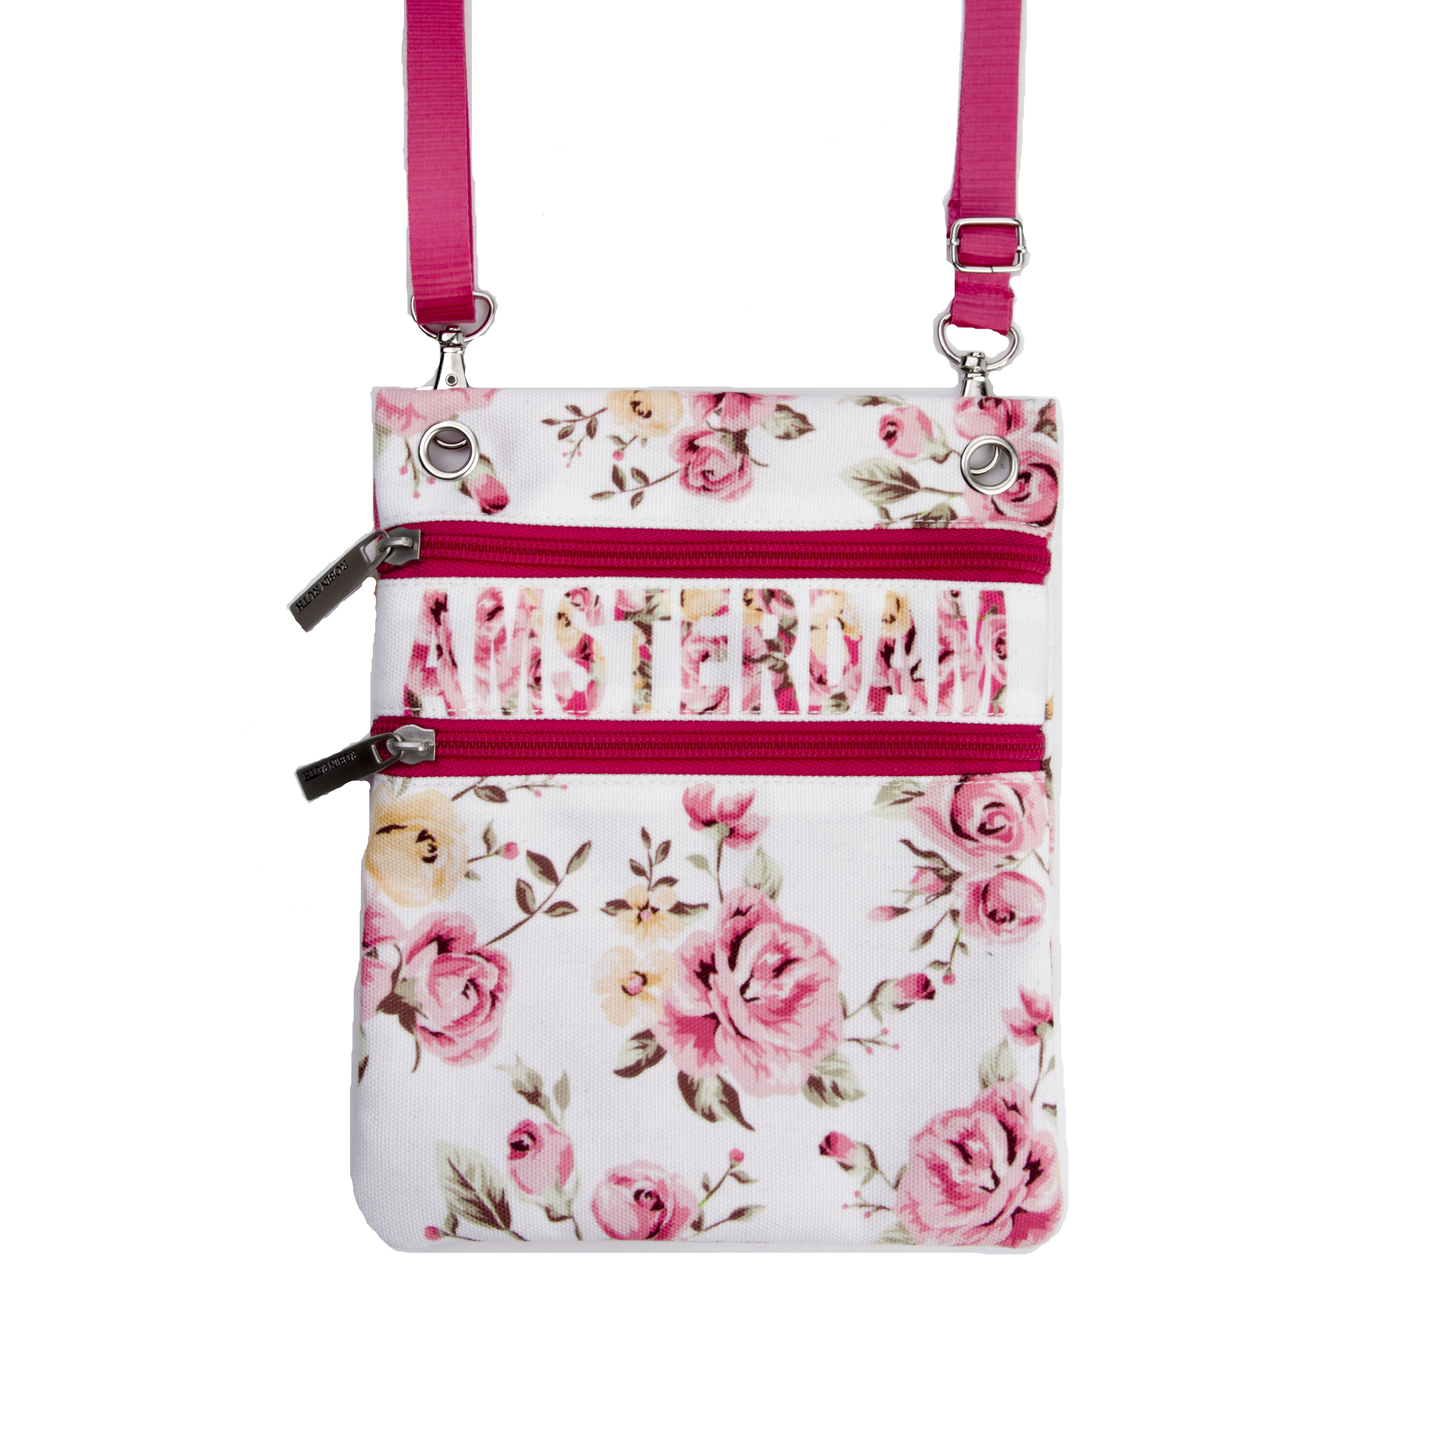 Charlie flowers - Passport bag - Amsterdam